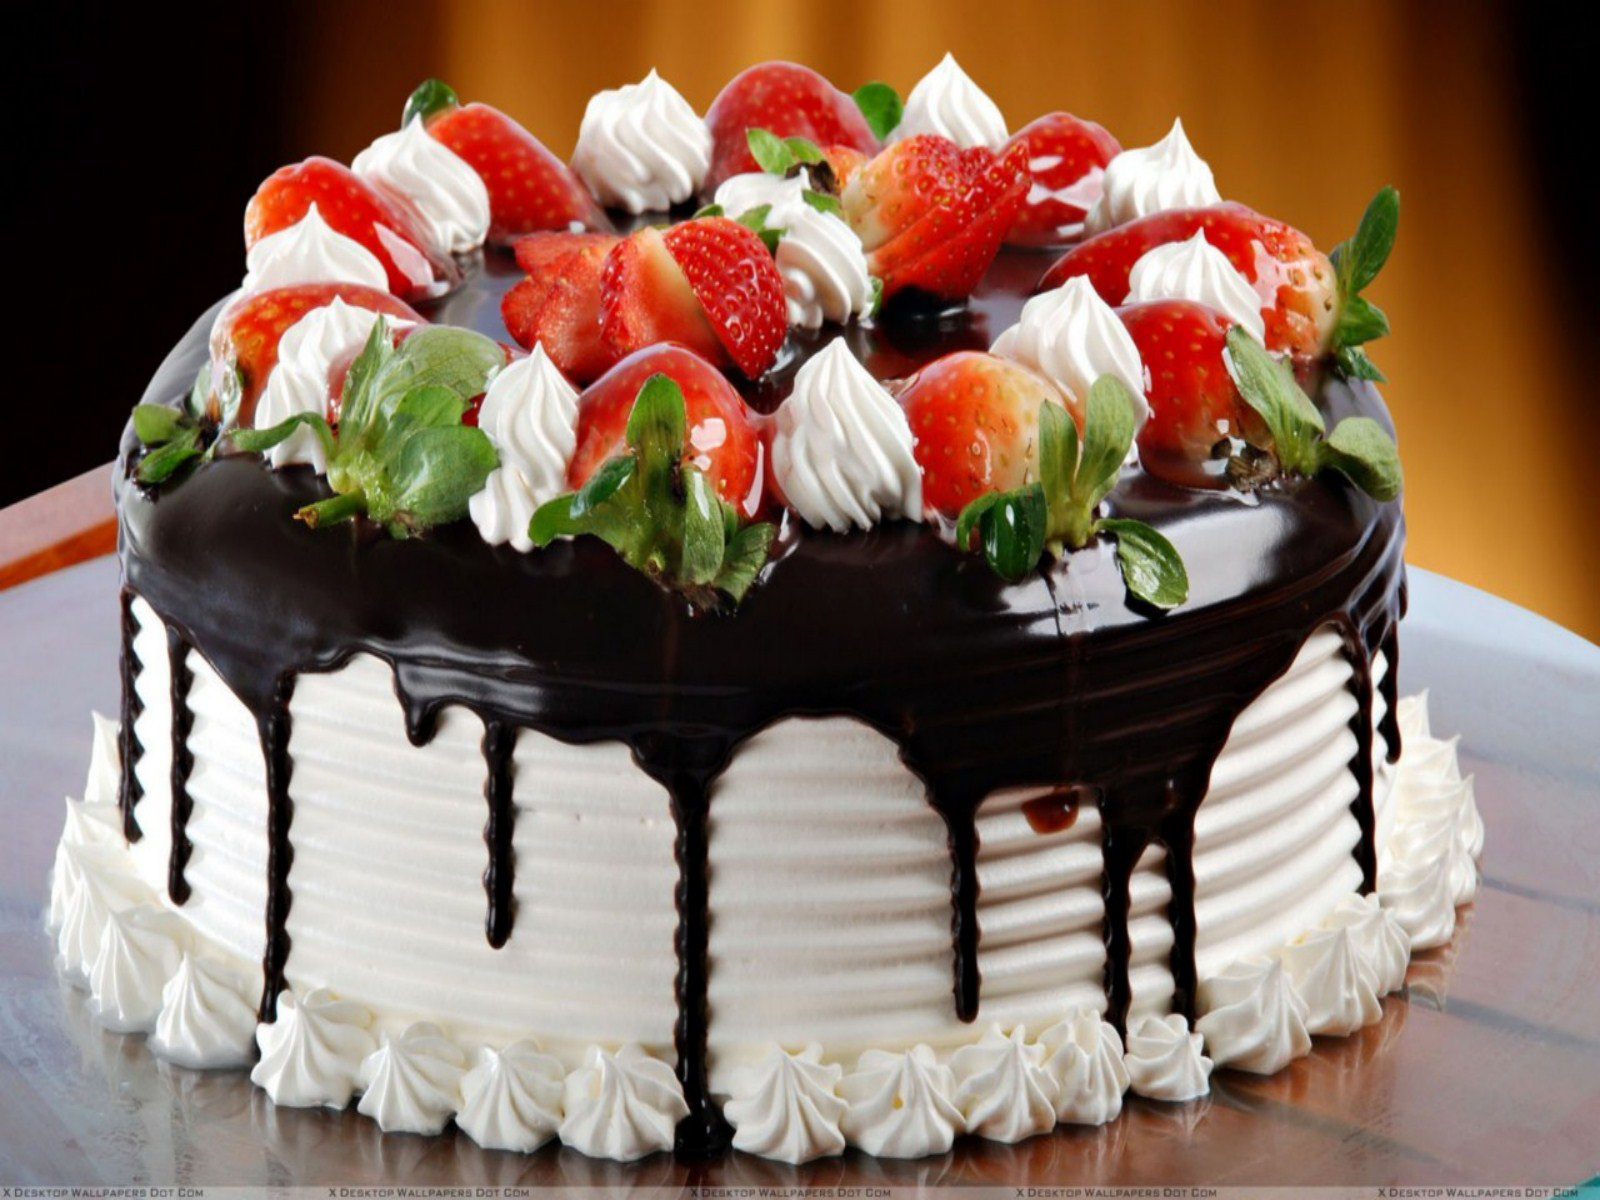 bd-cake.jpg